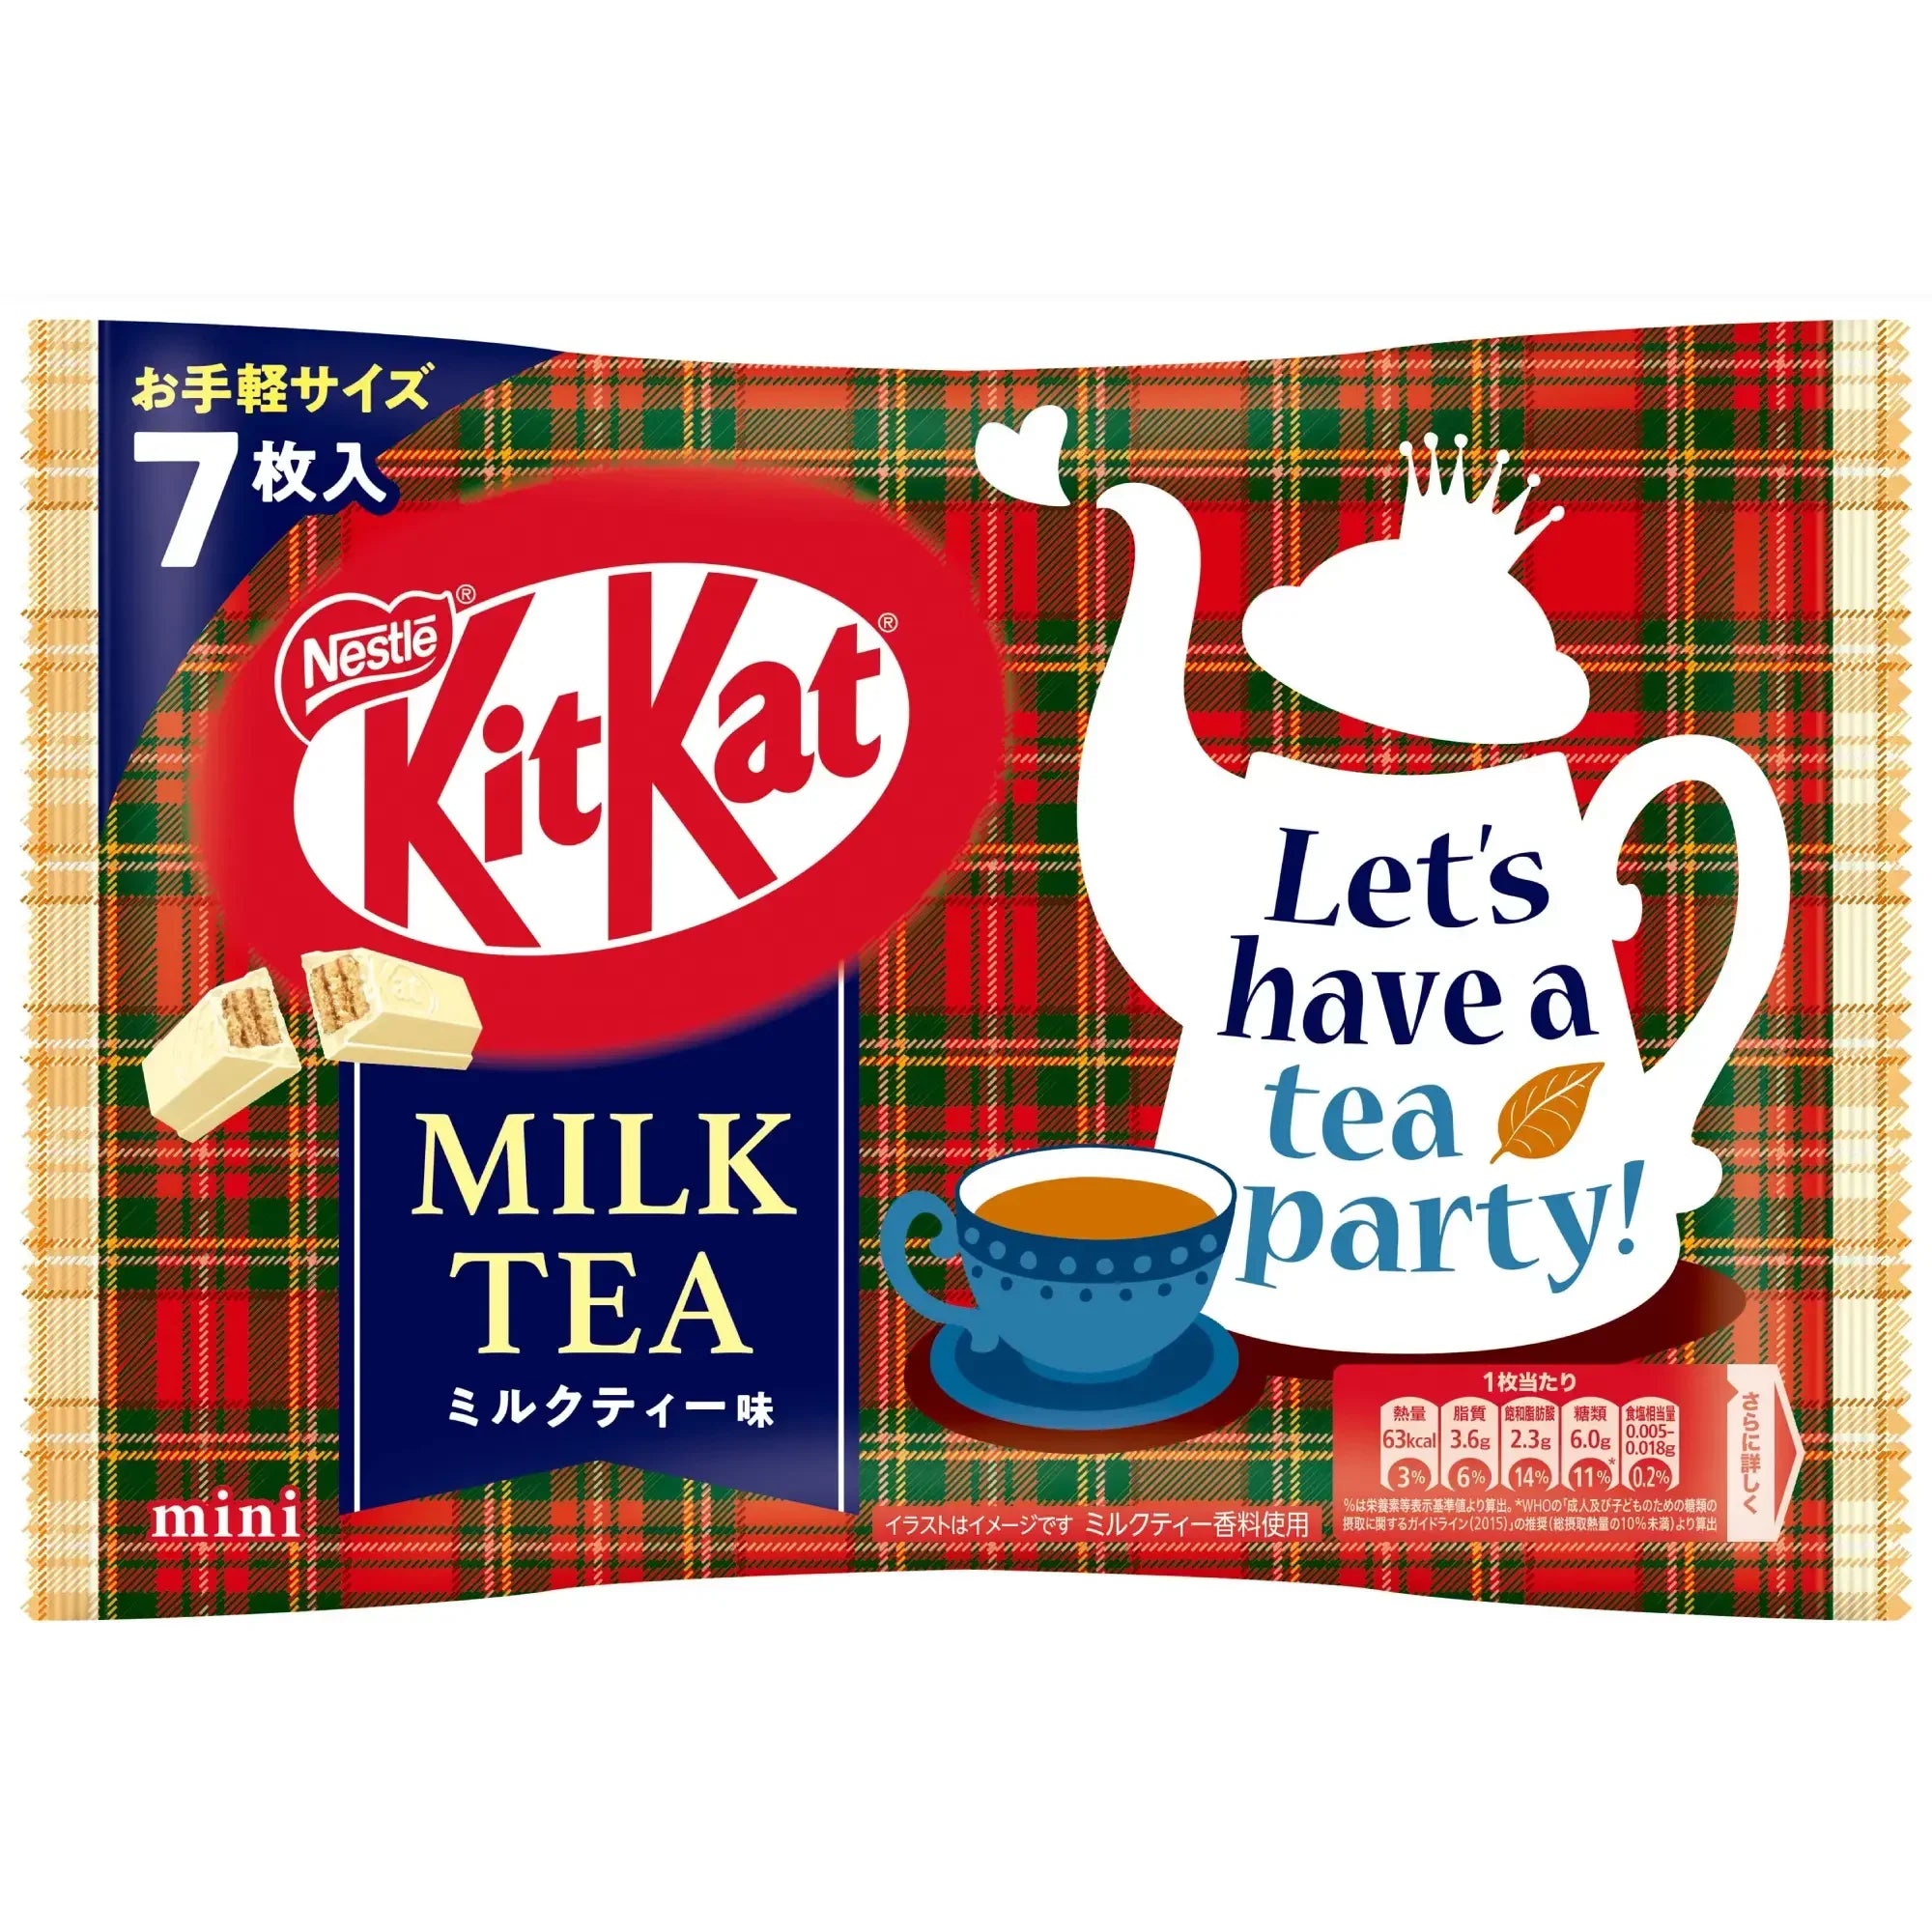 Nestlé Japanese Kit Kat Milk Tea Flavor 7 Bars